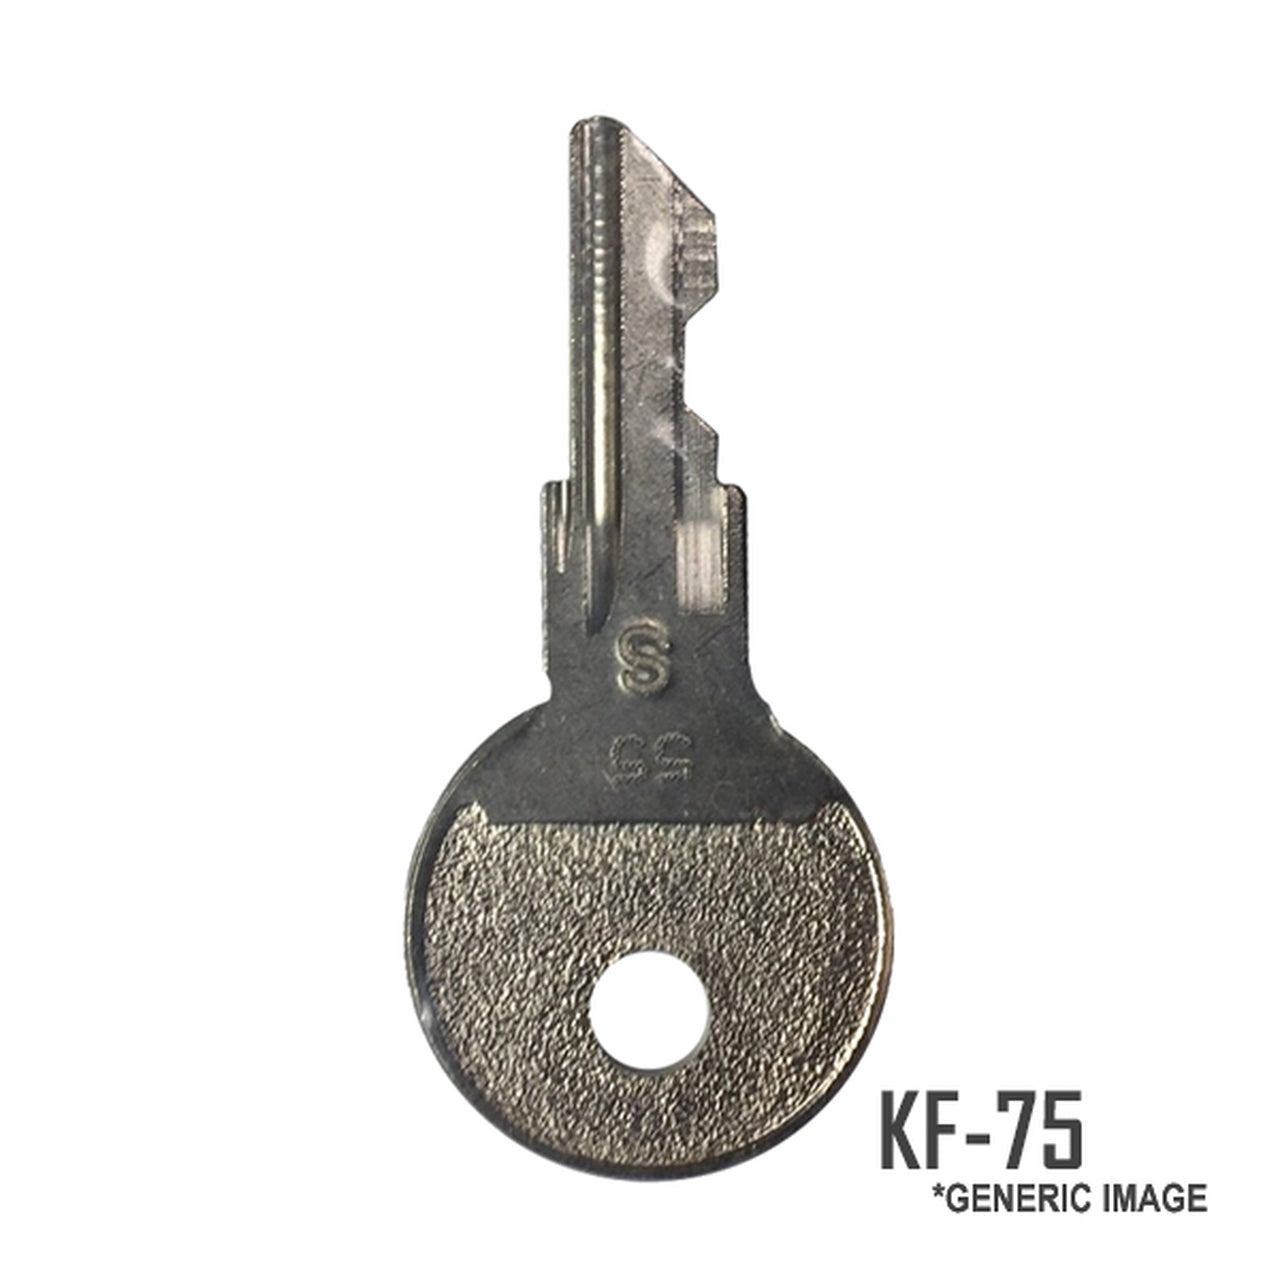 Evinrude Johnson KF Series Ignition Key KF-75 0501590